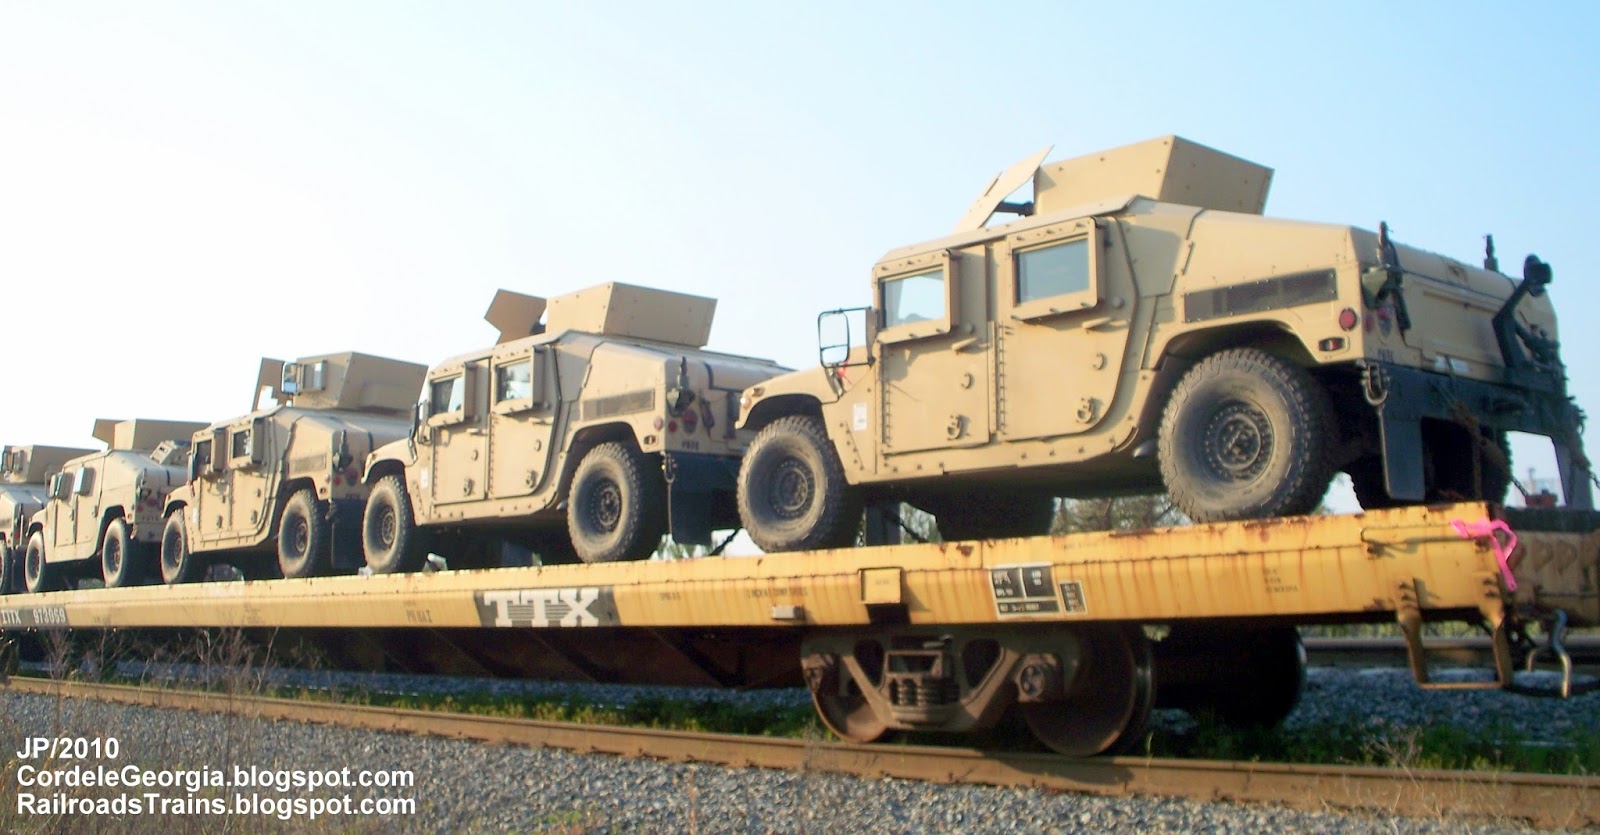 Military US Army Vehicles on CSXT Railroad Freight Train passing thru 